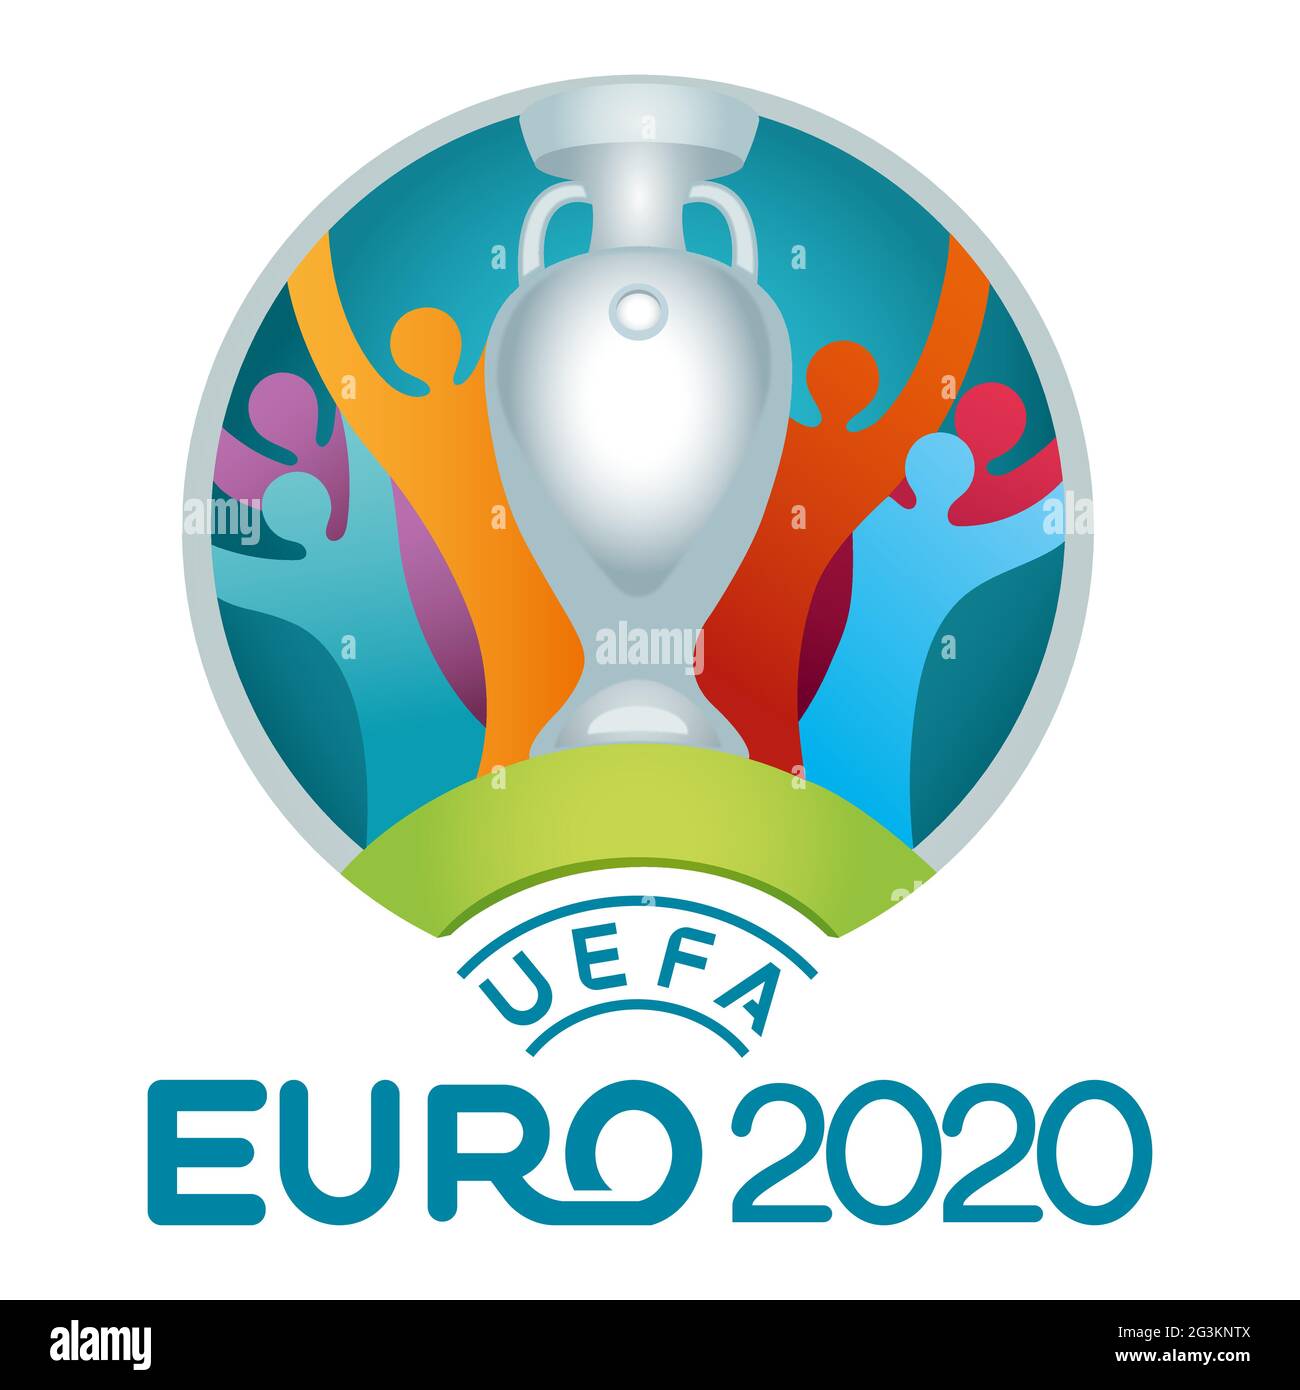 Vinnytsia, Ukraine - 16 juin 2021 UEFA EURO 2020 logo isolé sur fond blanc Illustration de Vecteur